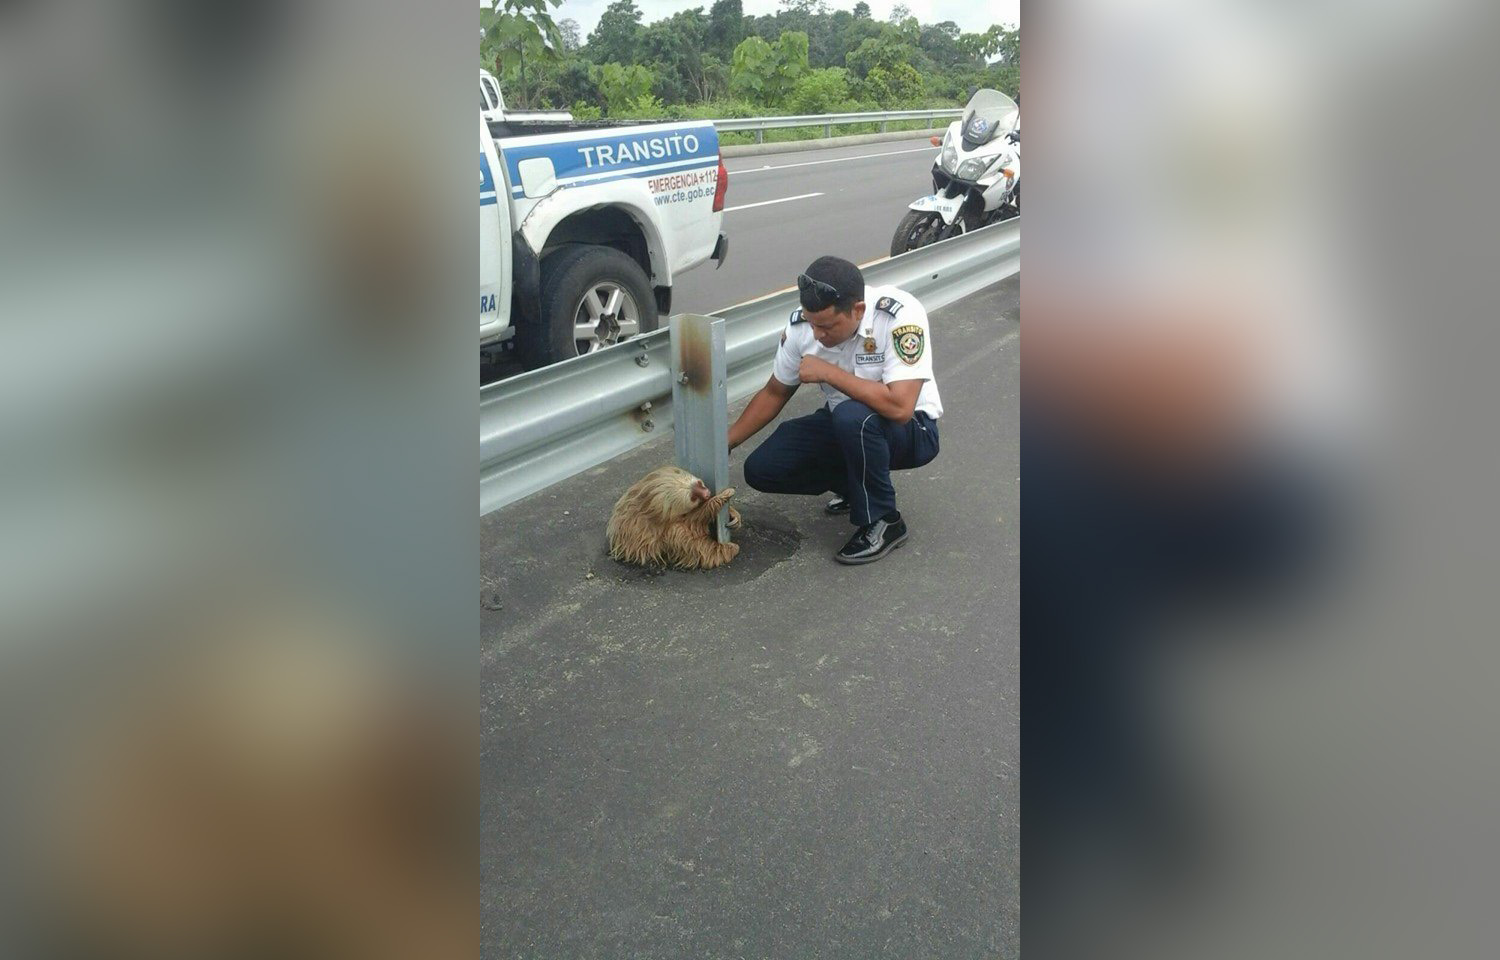 PHOTO: Transportation officers in Los Rios, Ecuador rescued a sloth, Jan. 22, 2015.